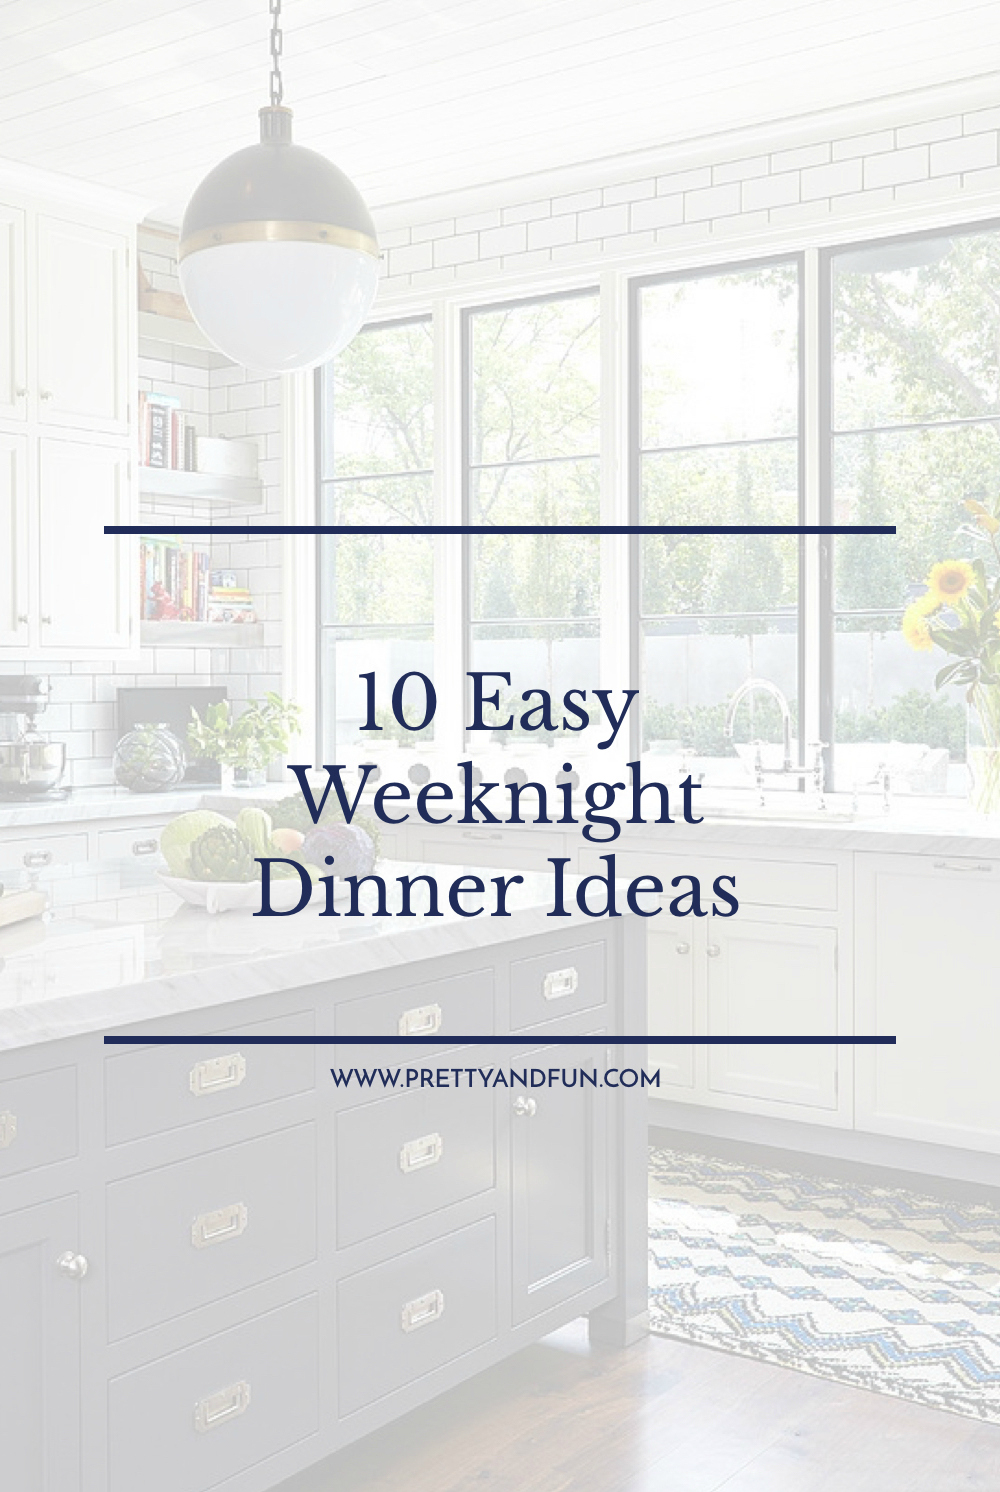 10 Easy Weeknight Dinner Ideas.